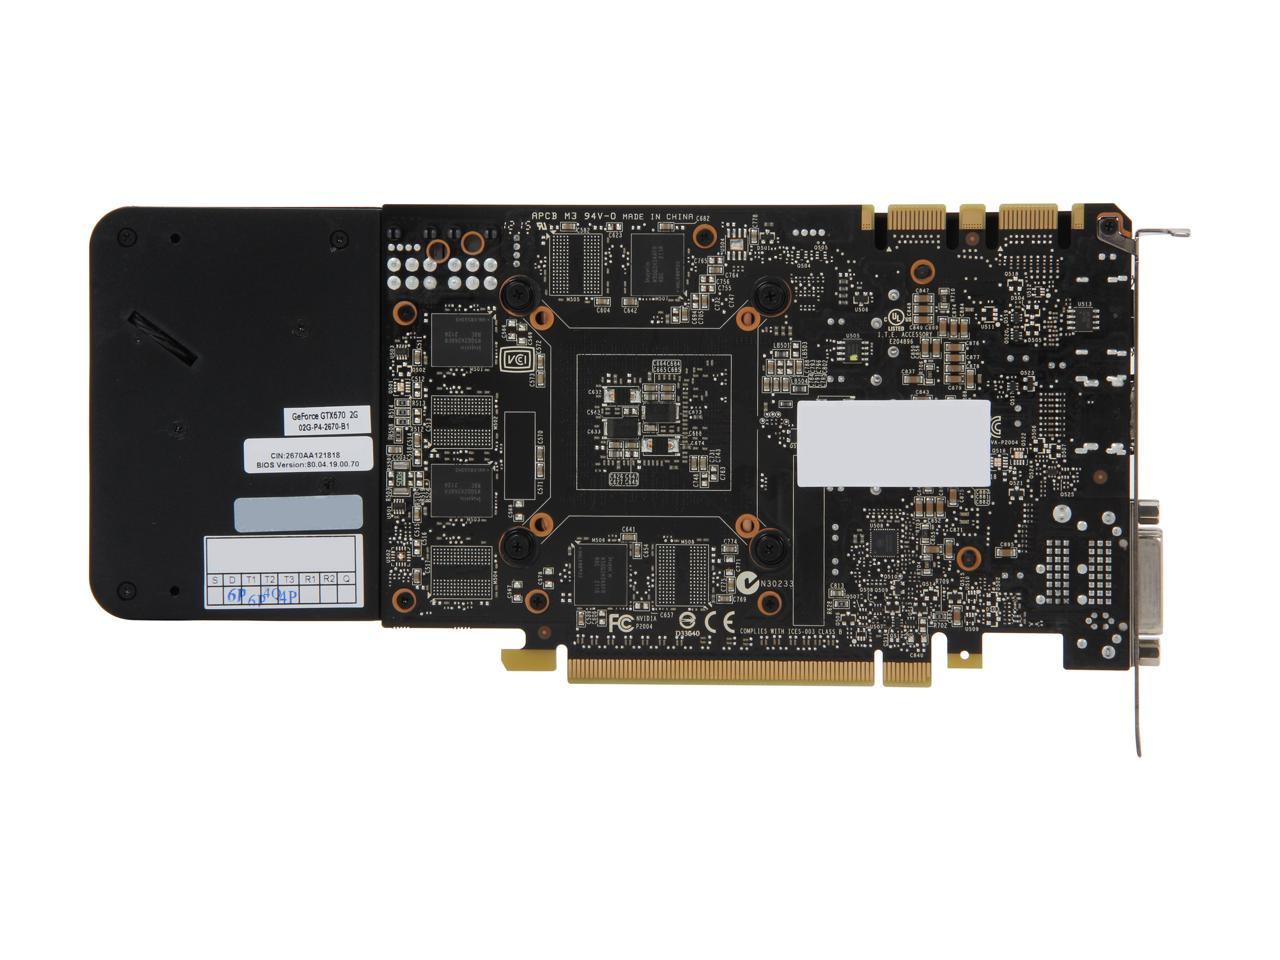 EVGA GeForce GTX 670 DirectX 11 02G-P4-2670-KR 2GB 256-Bit GDDR5 PCI Express 3.0 x16 HDCP Ready SLI Support Video Card